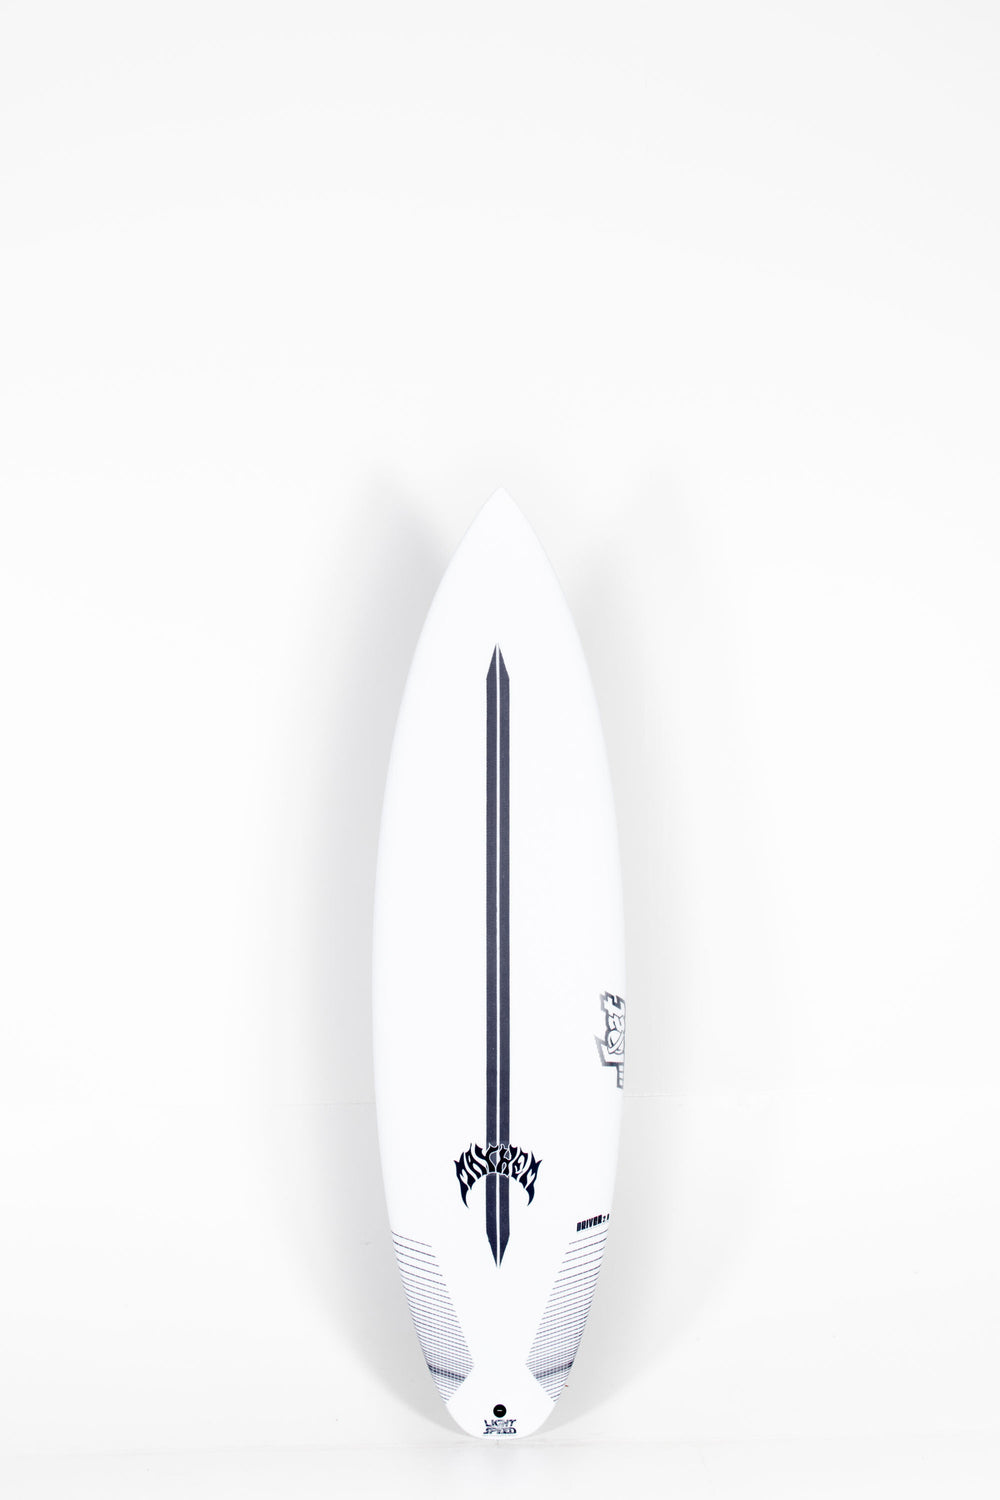 Lost Surfboard - DRIVER 2.0 by Matt Biolos - Light Speed - 6'0” x ...